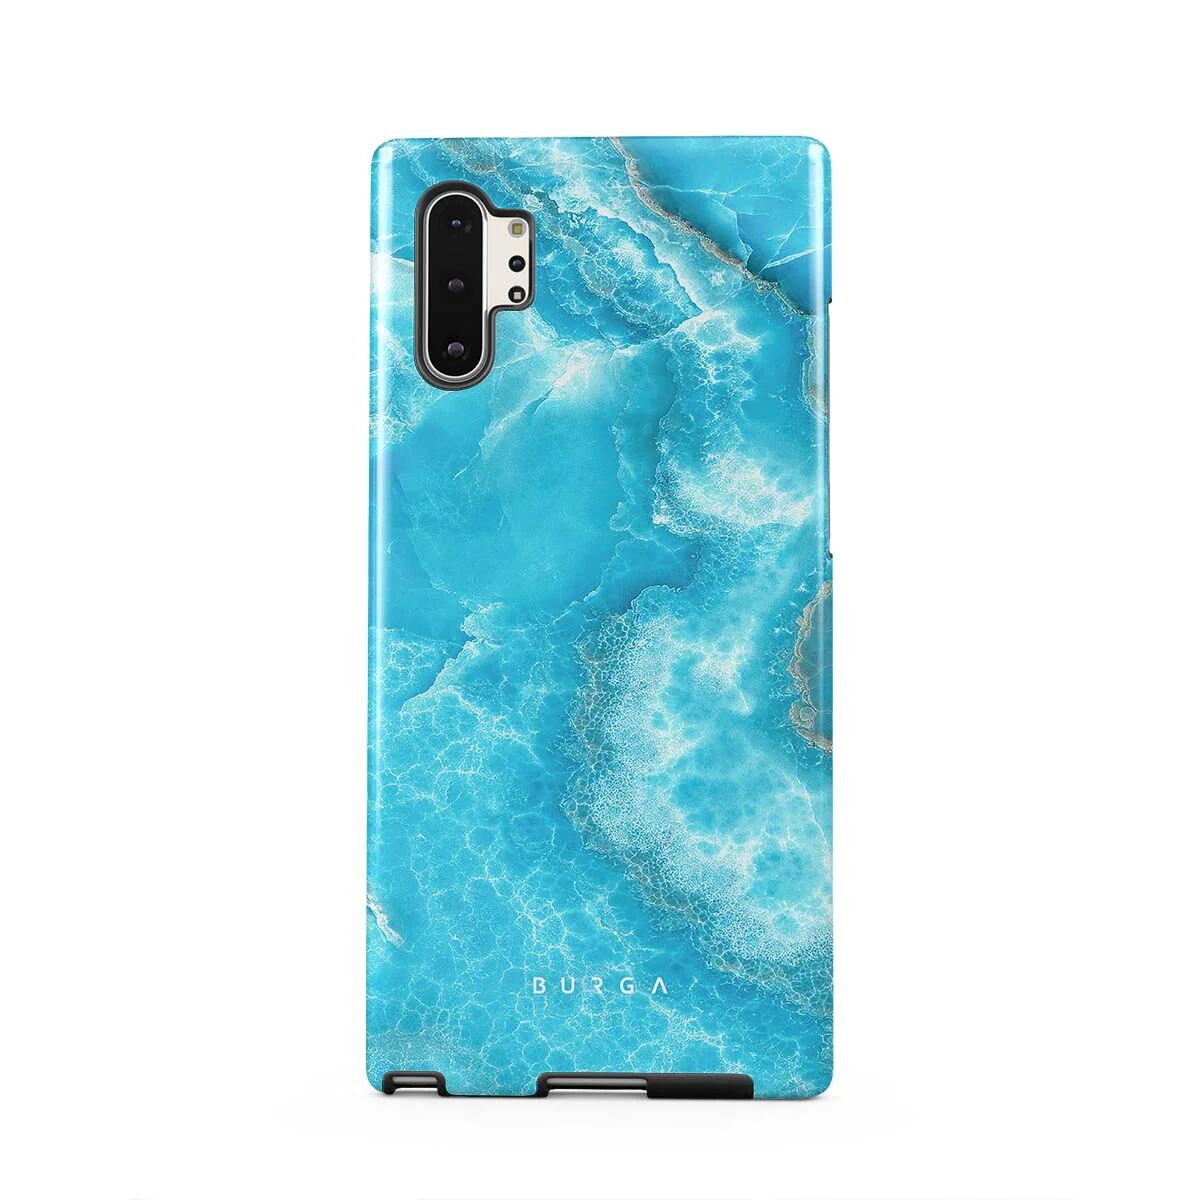 BURGA Ocean Waves - Blue Samsung Galaxy Note 10 Plus Case